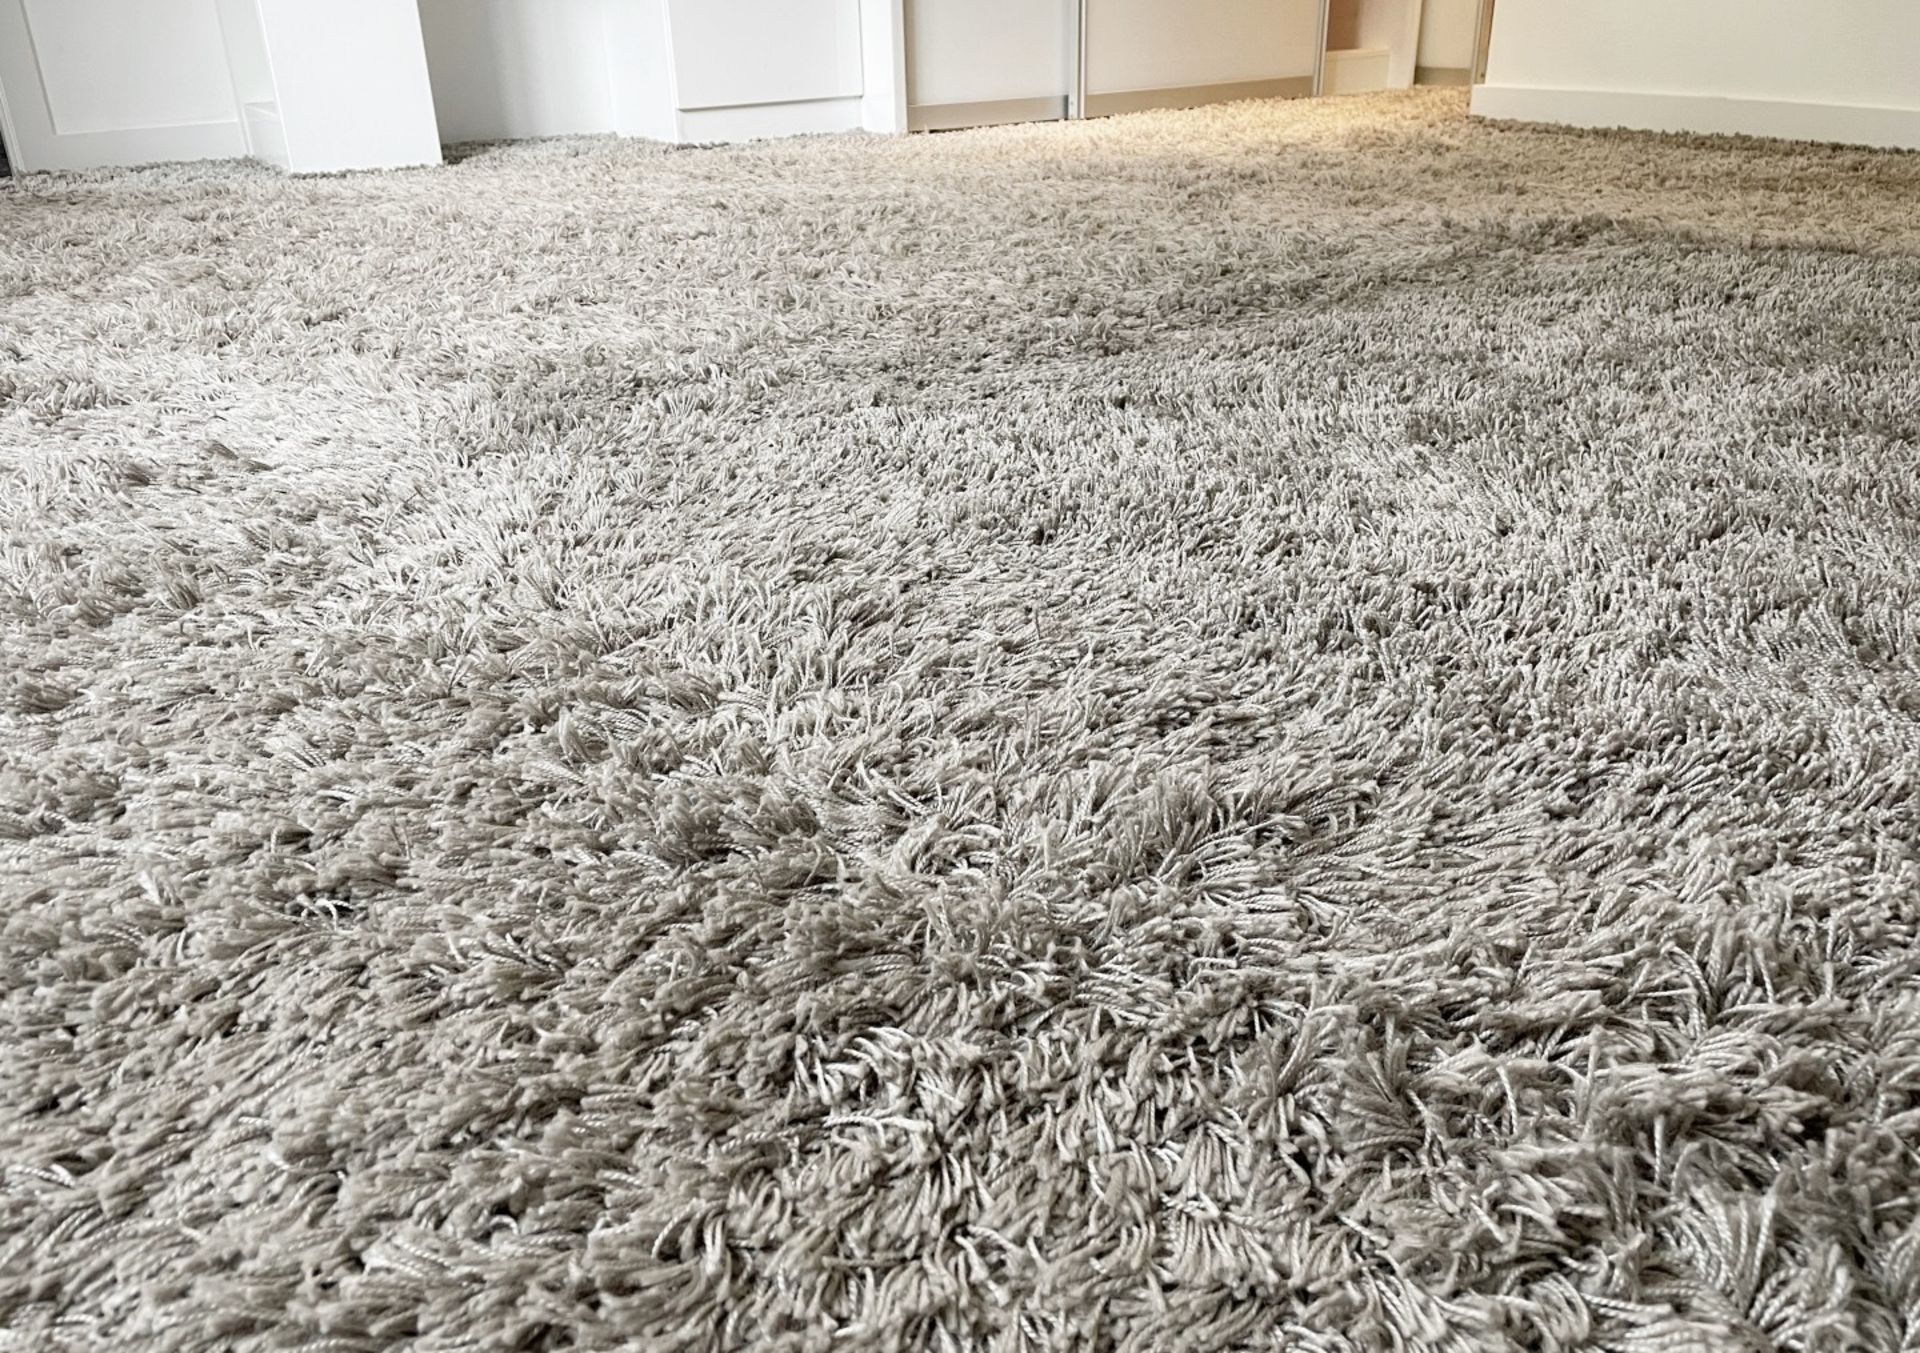 1 x Premium Fitted SHAGPILE Bedroom Carpet In Grey (4.6 x 3.9m) - Ref: FRNT-BD(B)SHG/1stFLR - - Image 5 of 6